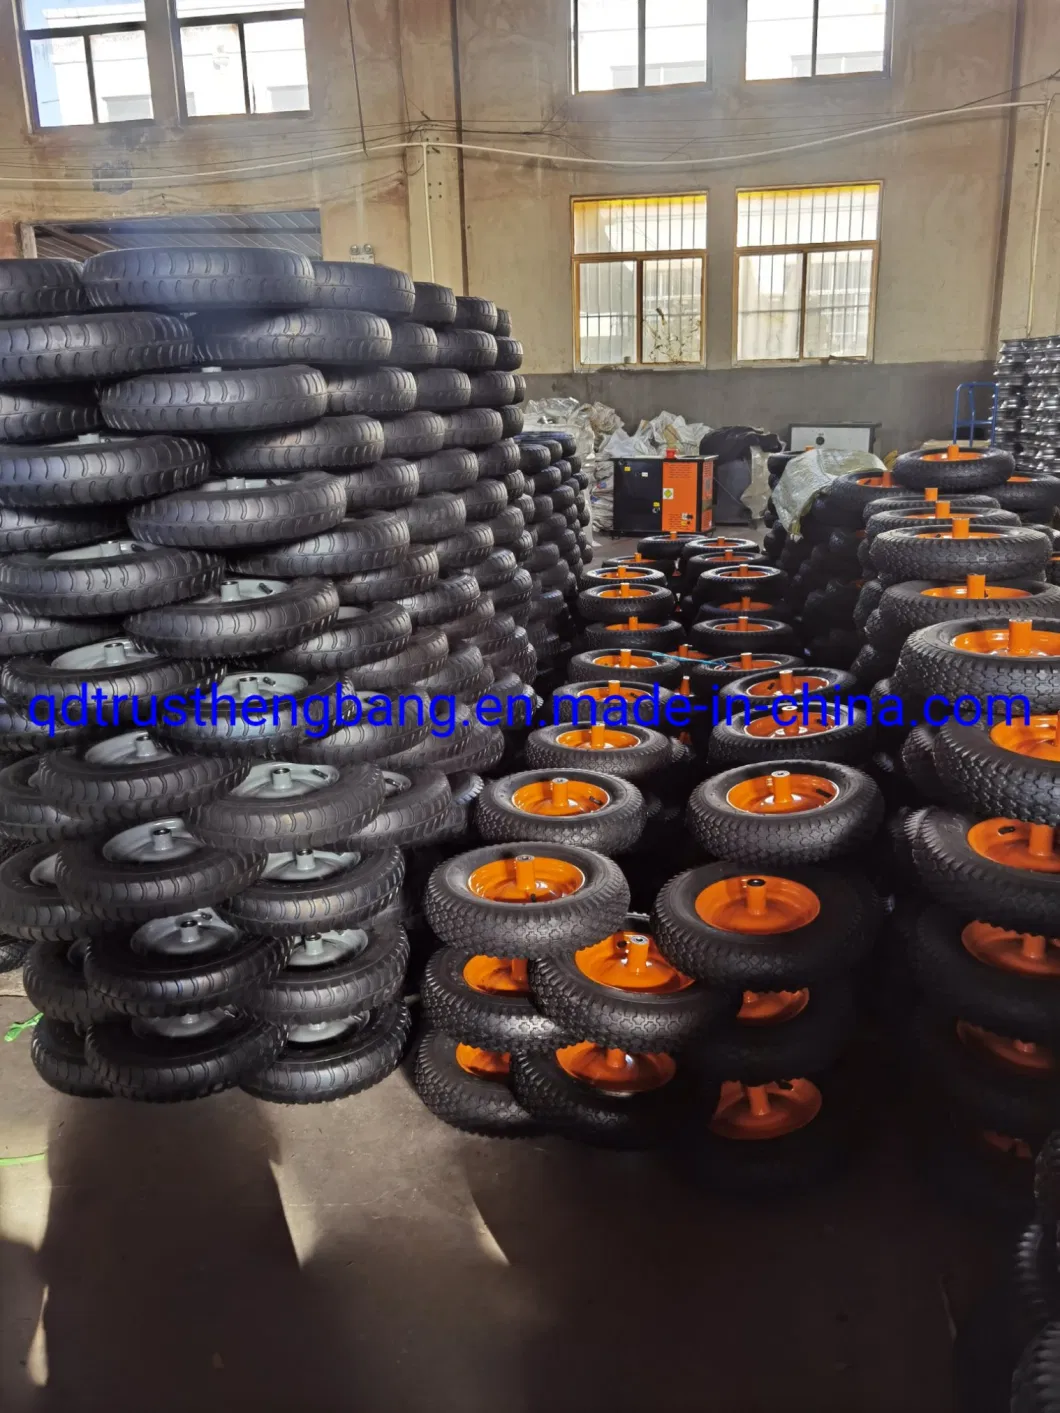 4.10/3.50-4 4.00-6 3.50-8 4.80/4.00-8 Pneumatic Wheel Rubber Tyre for Wheel Barrow Hand Trolley Hand Cart